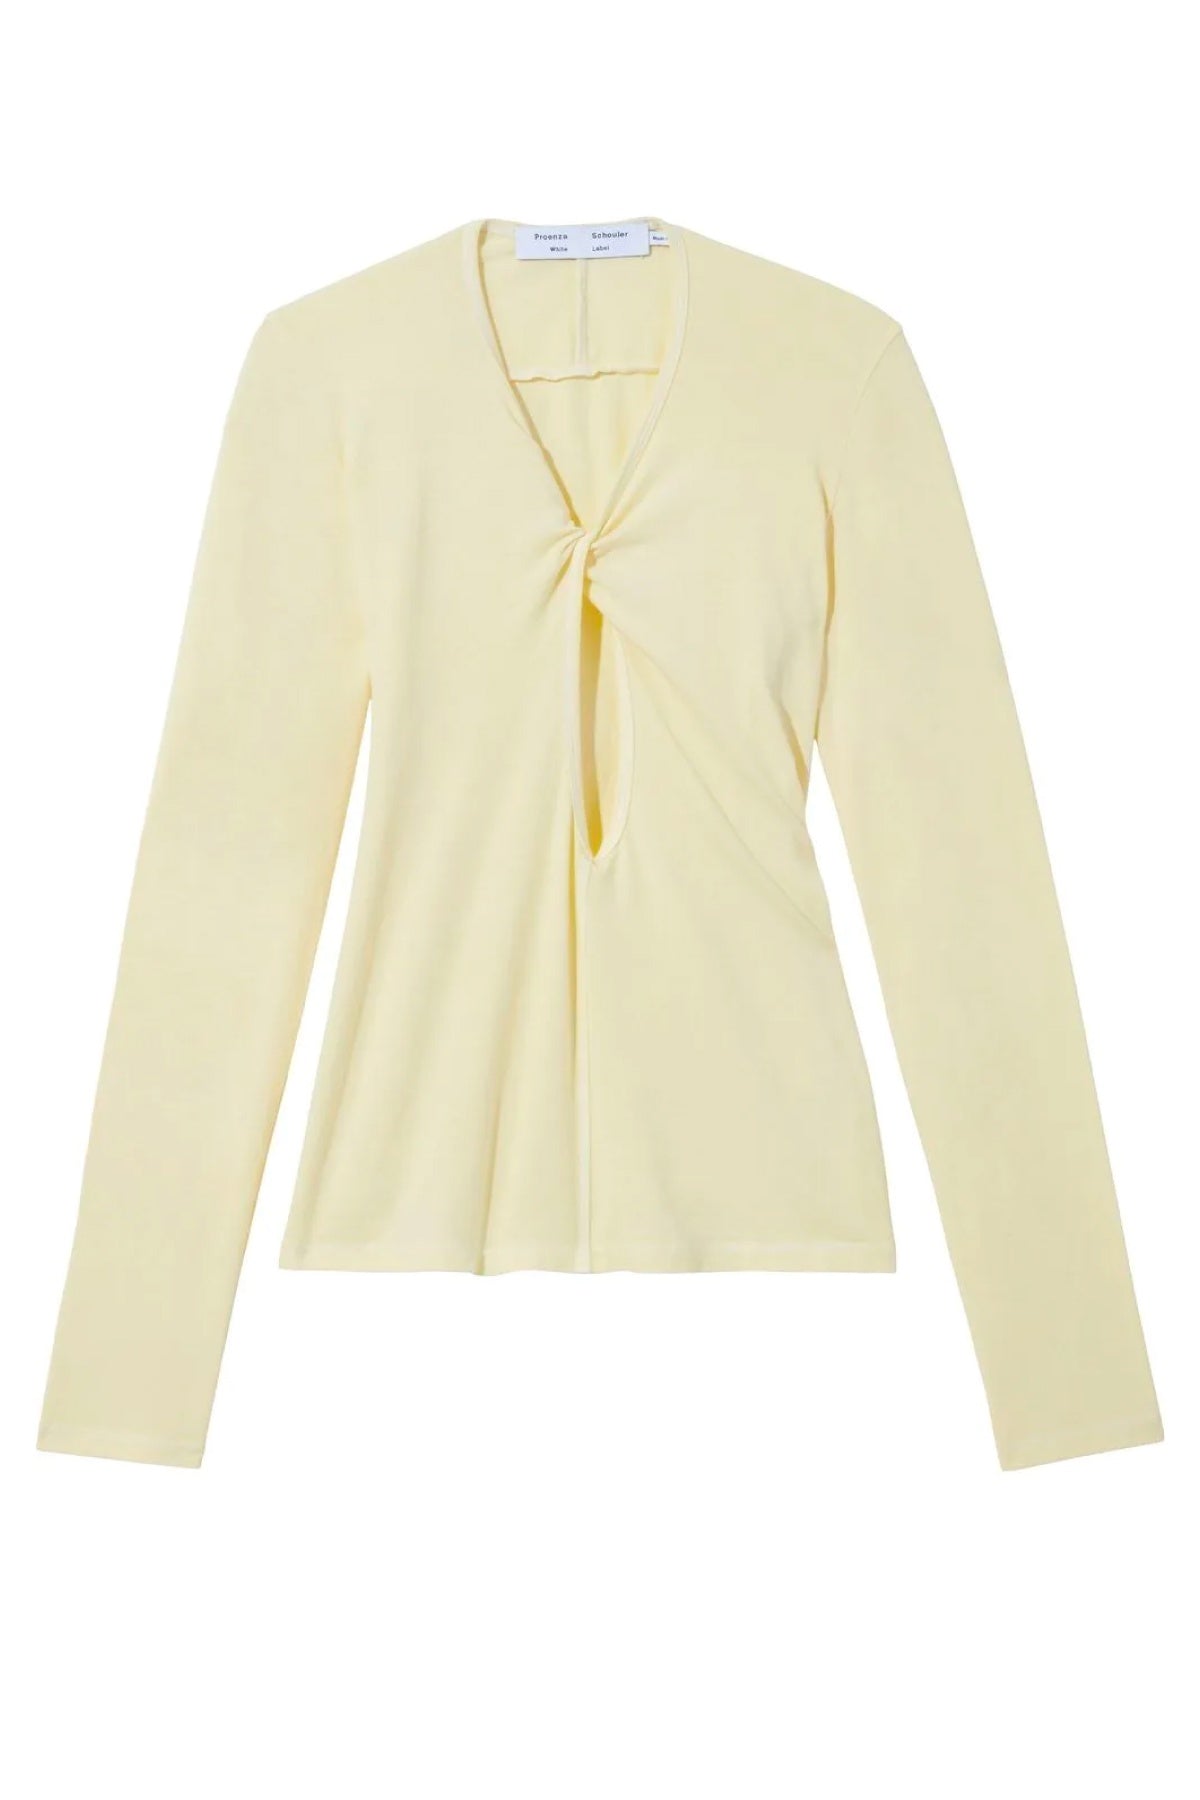 Proenza Schouler White Label Jersey Keyhole Top - Pale Yellow